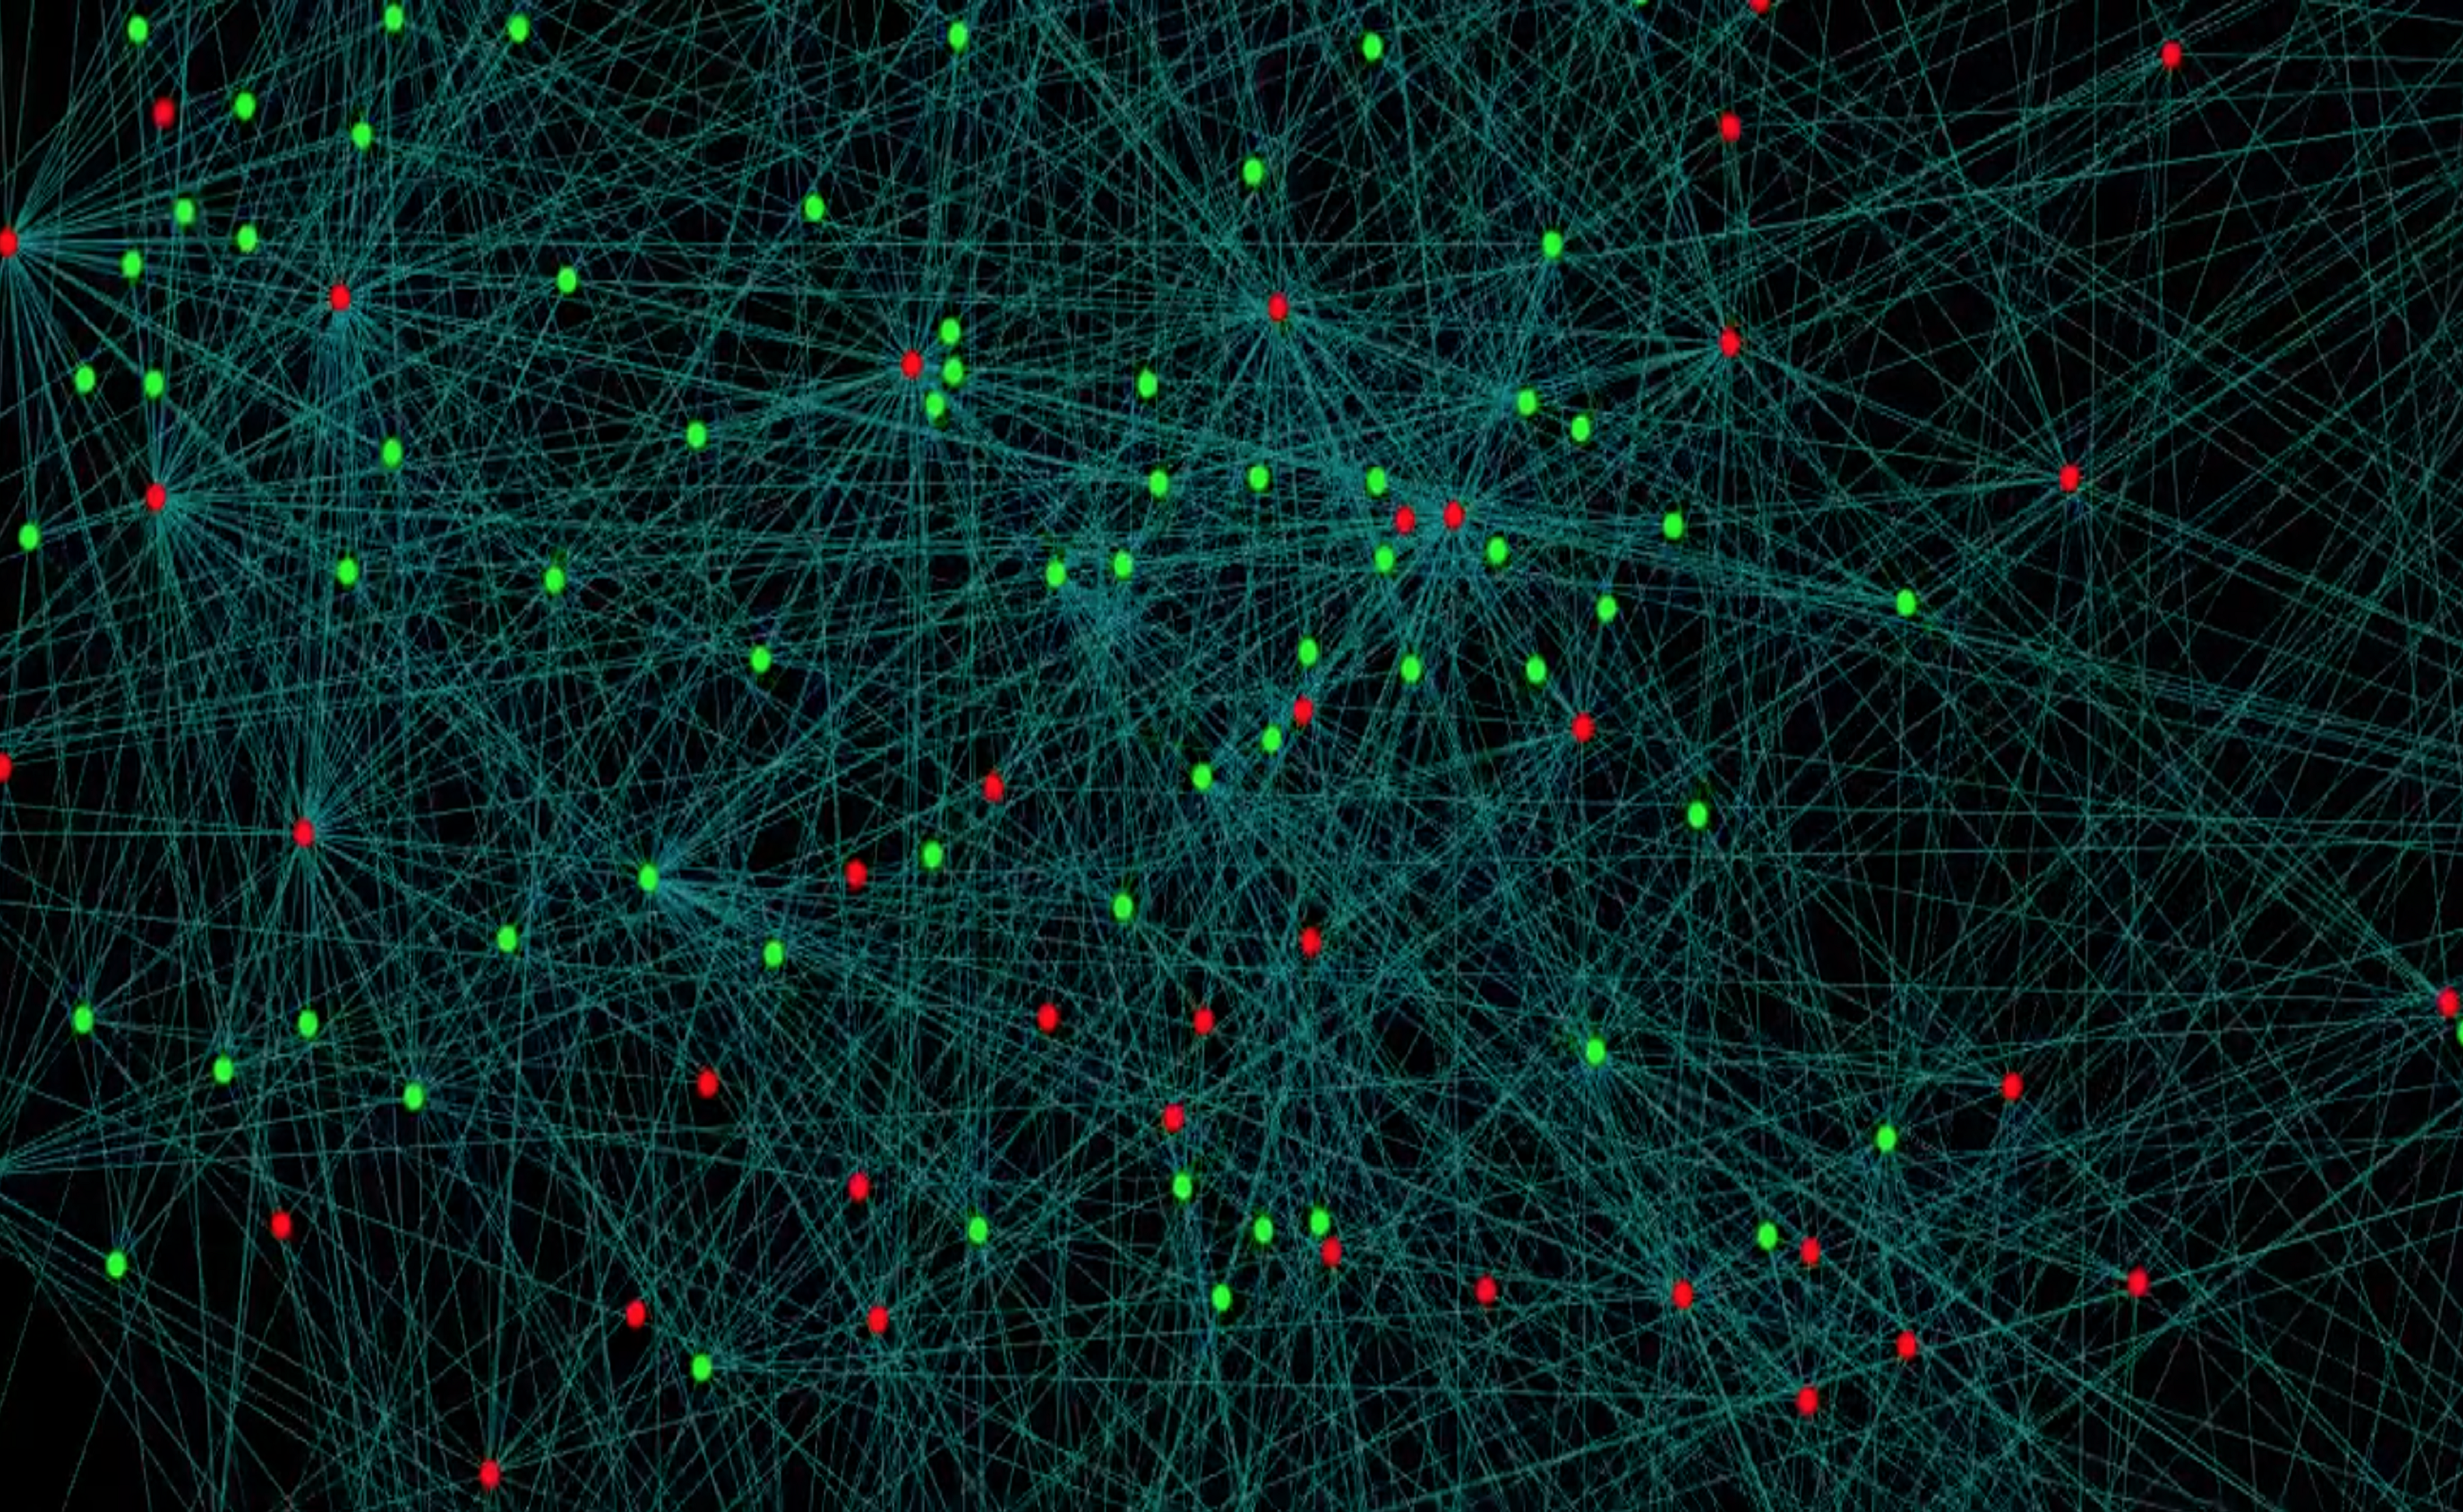 Red de interacciones humanas anónimas dibujada con Nervousnet. Fuente: Nervousnet.info.